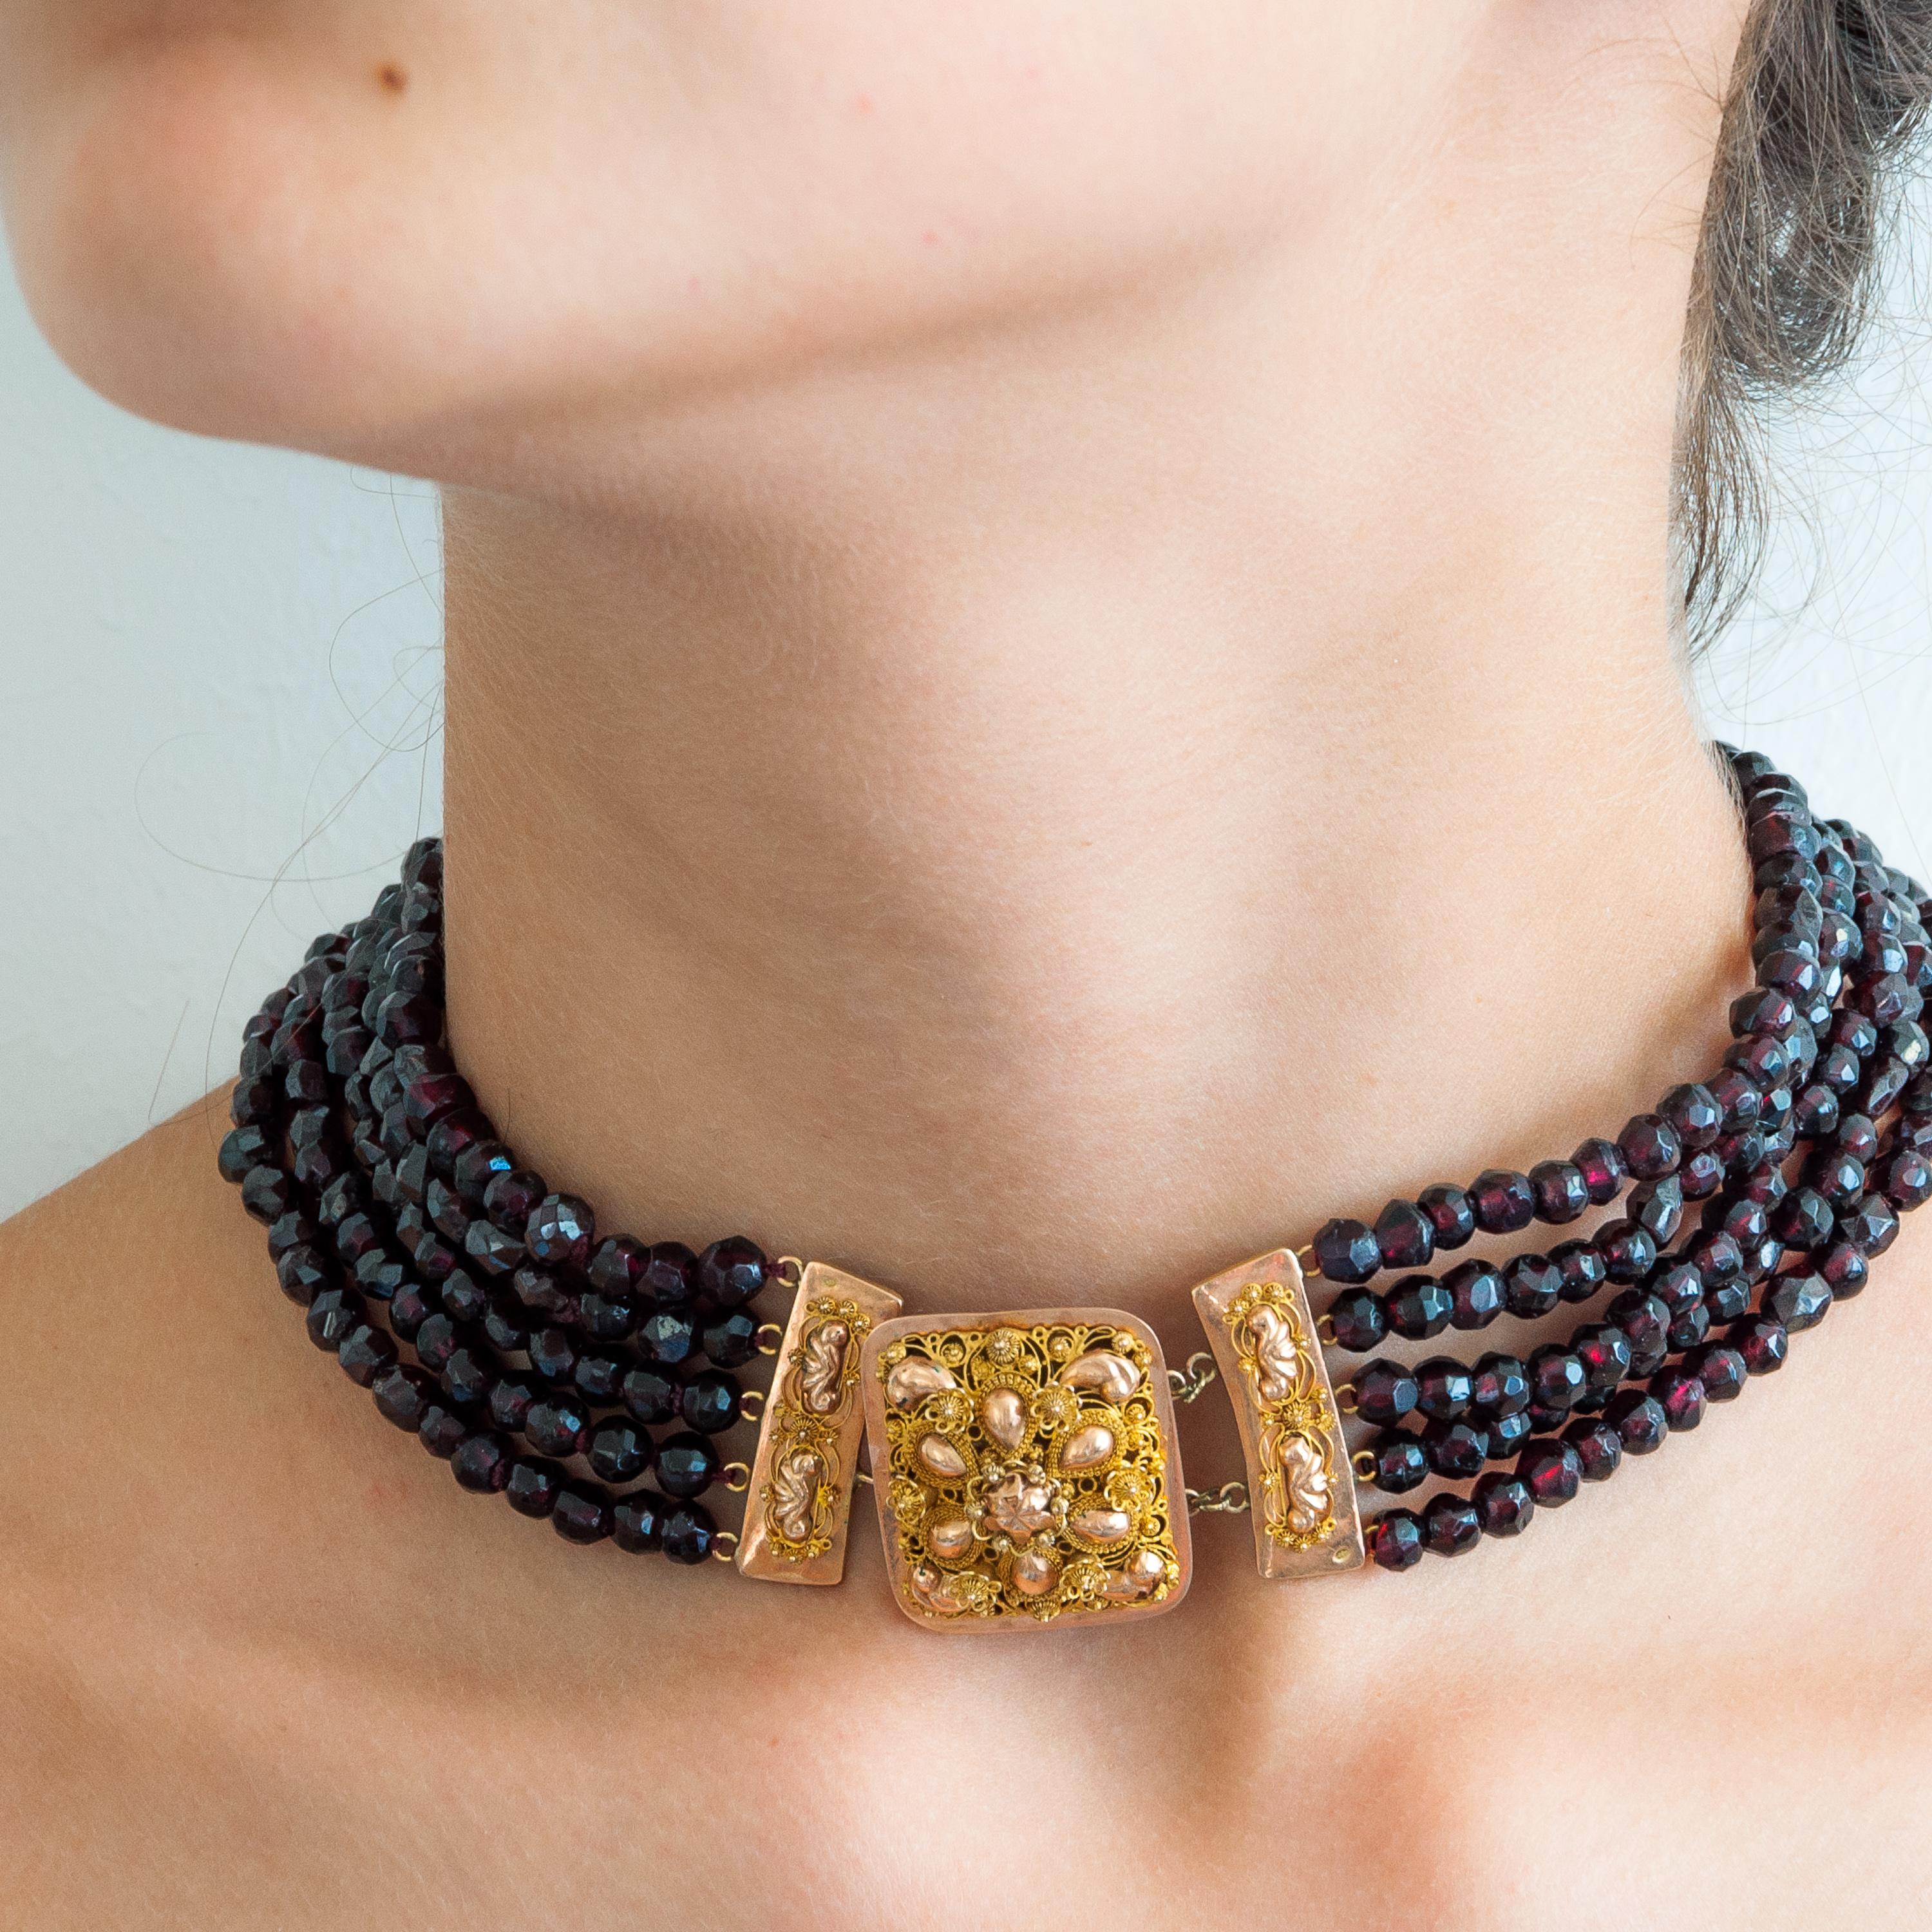 garnet strand necklace